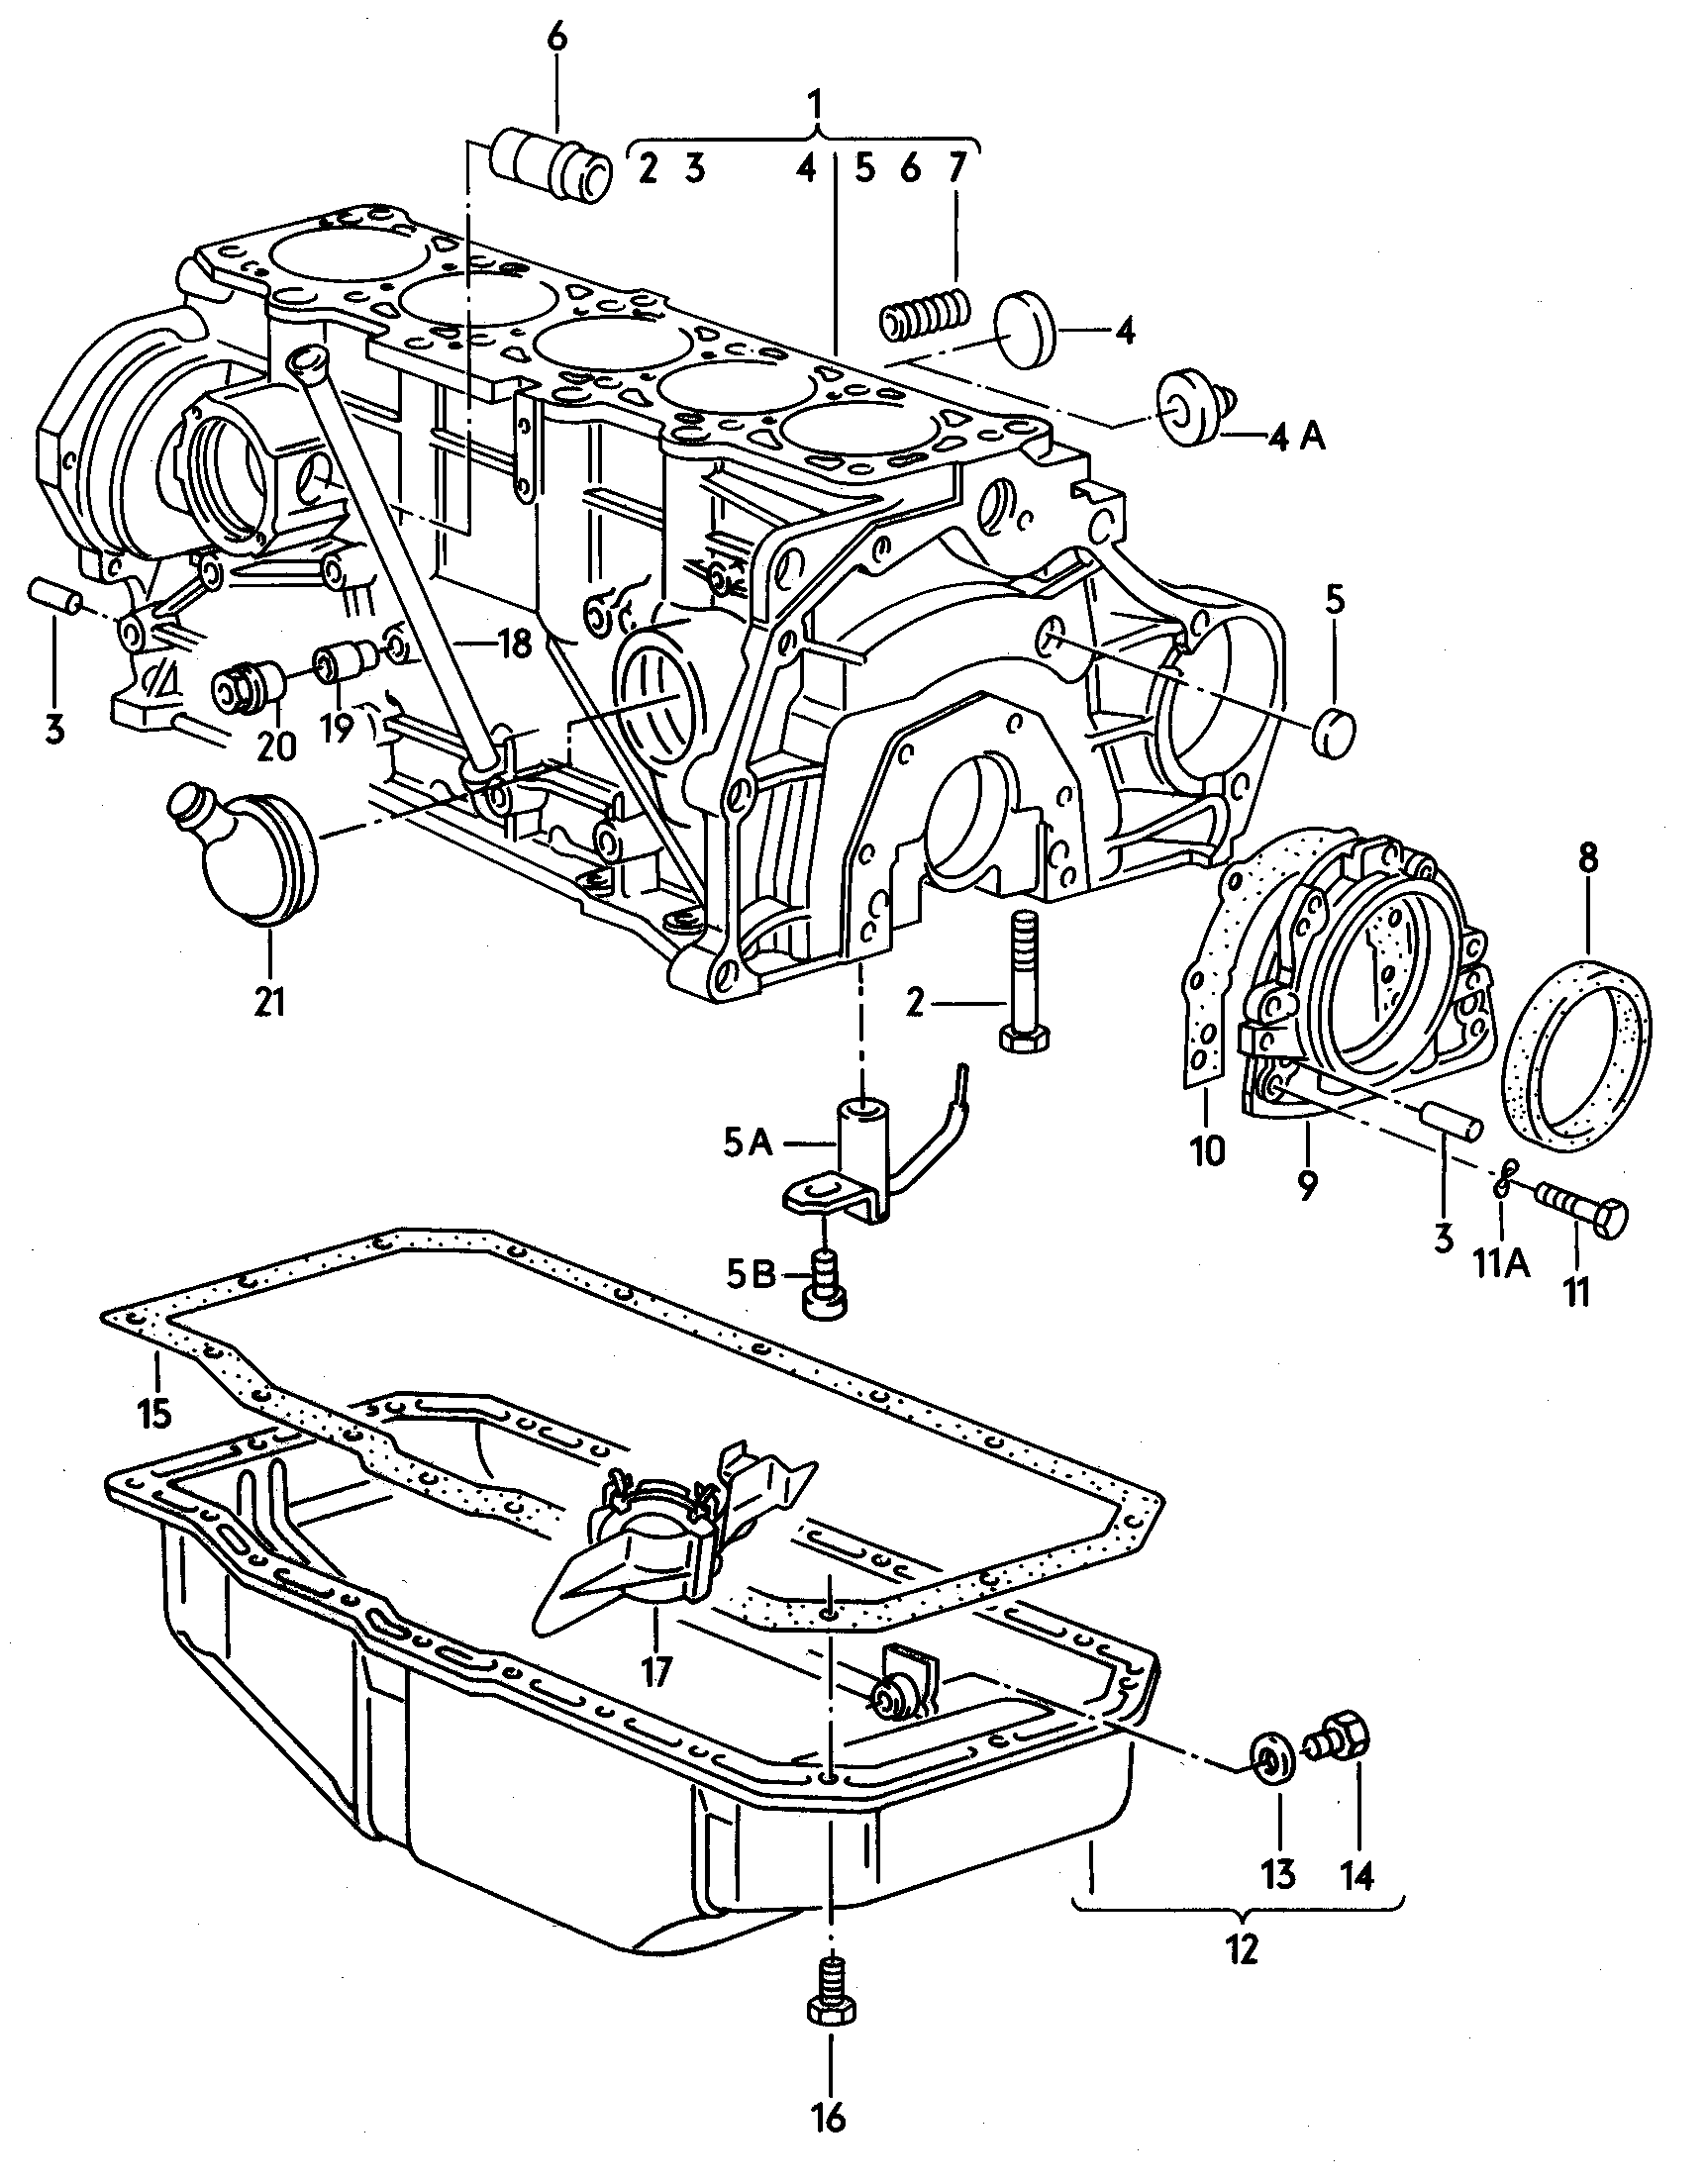 cylinder block with pistons; oil sump - Audi quattro/Sport(AQS)  